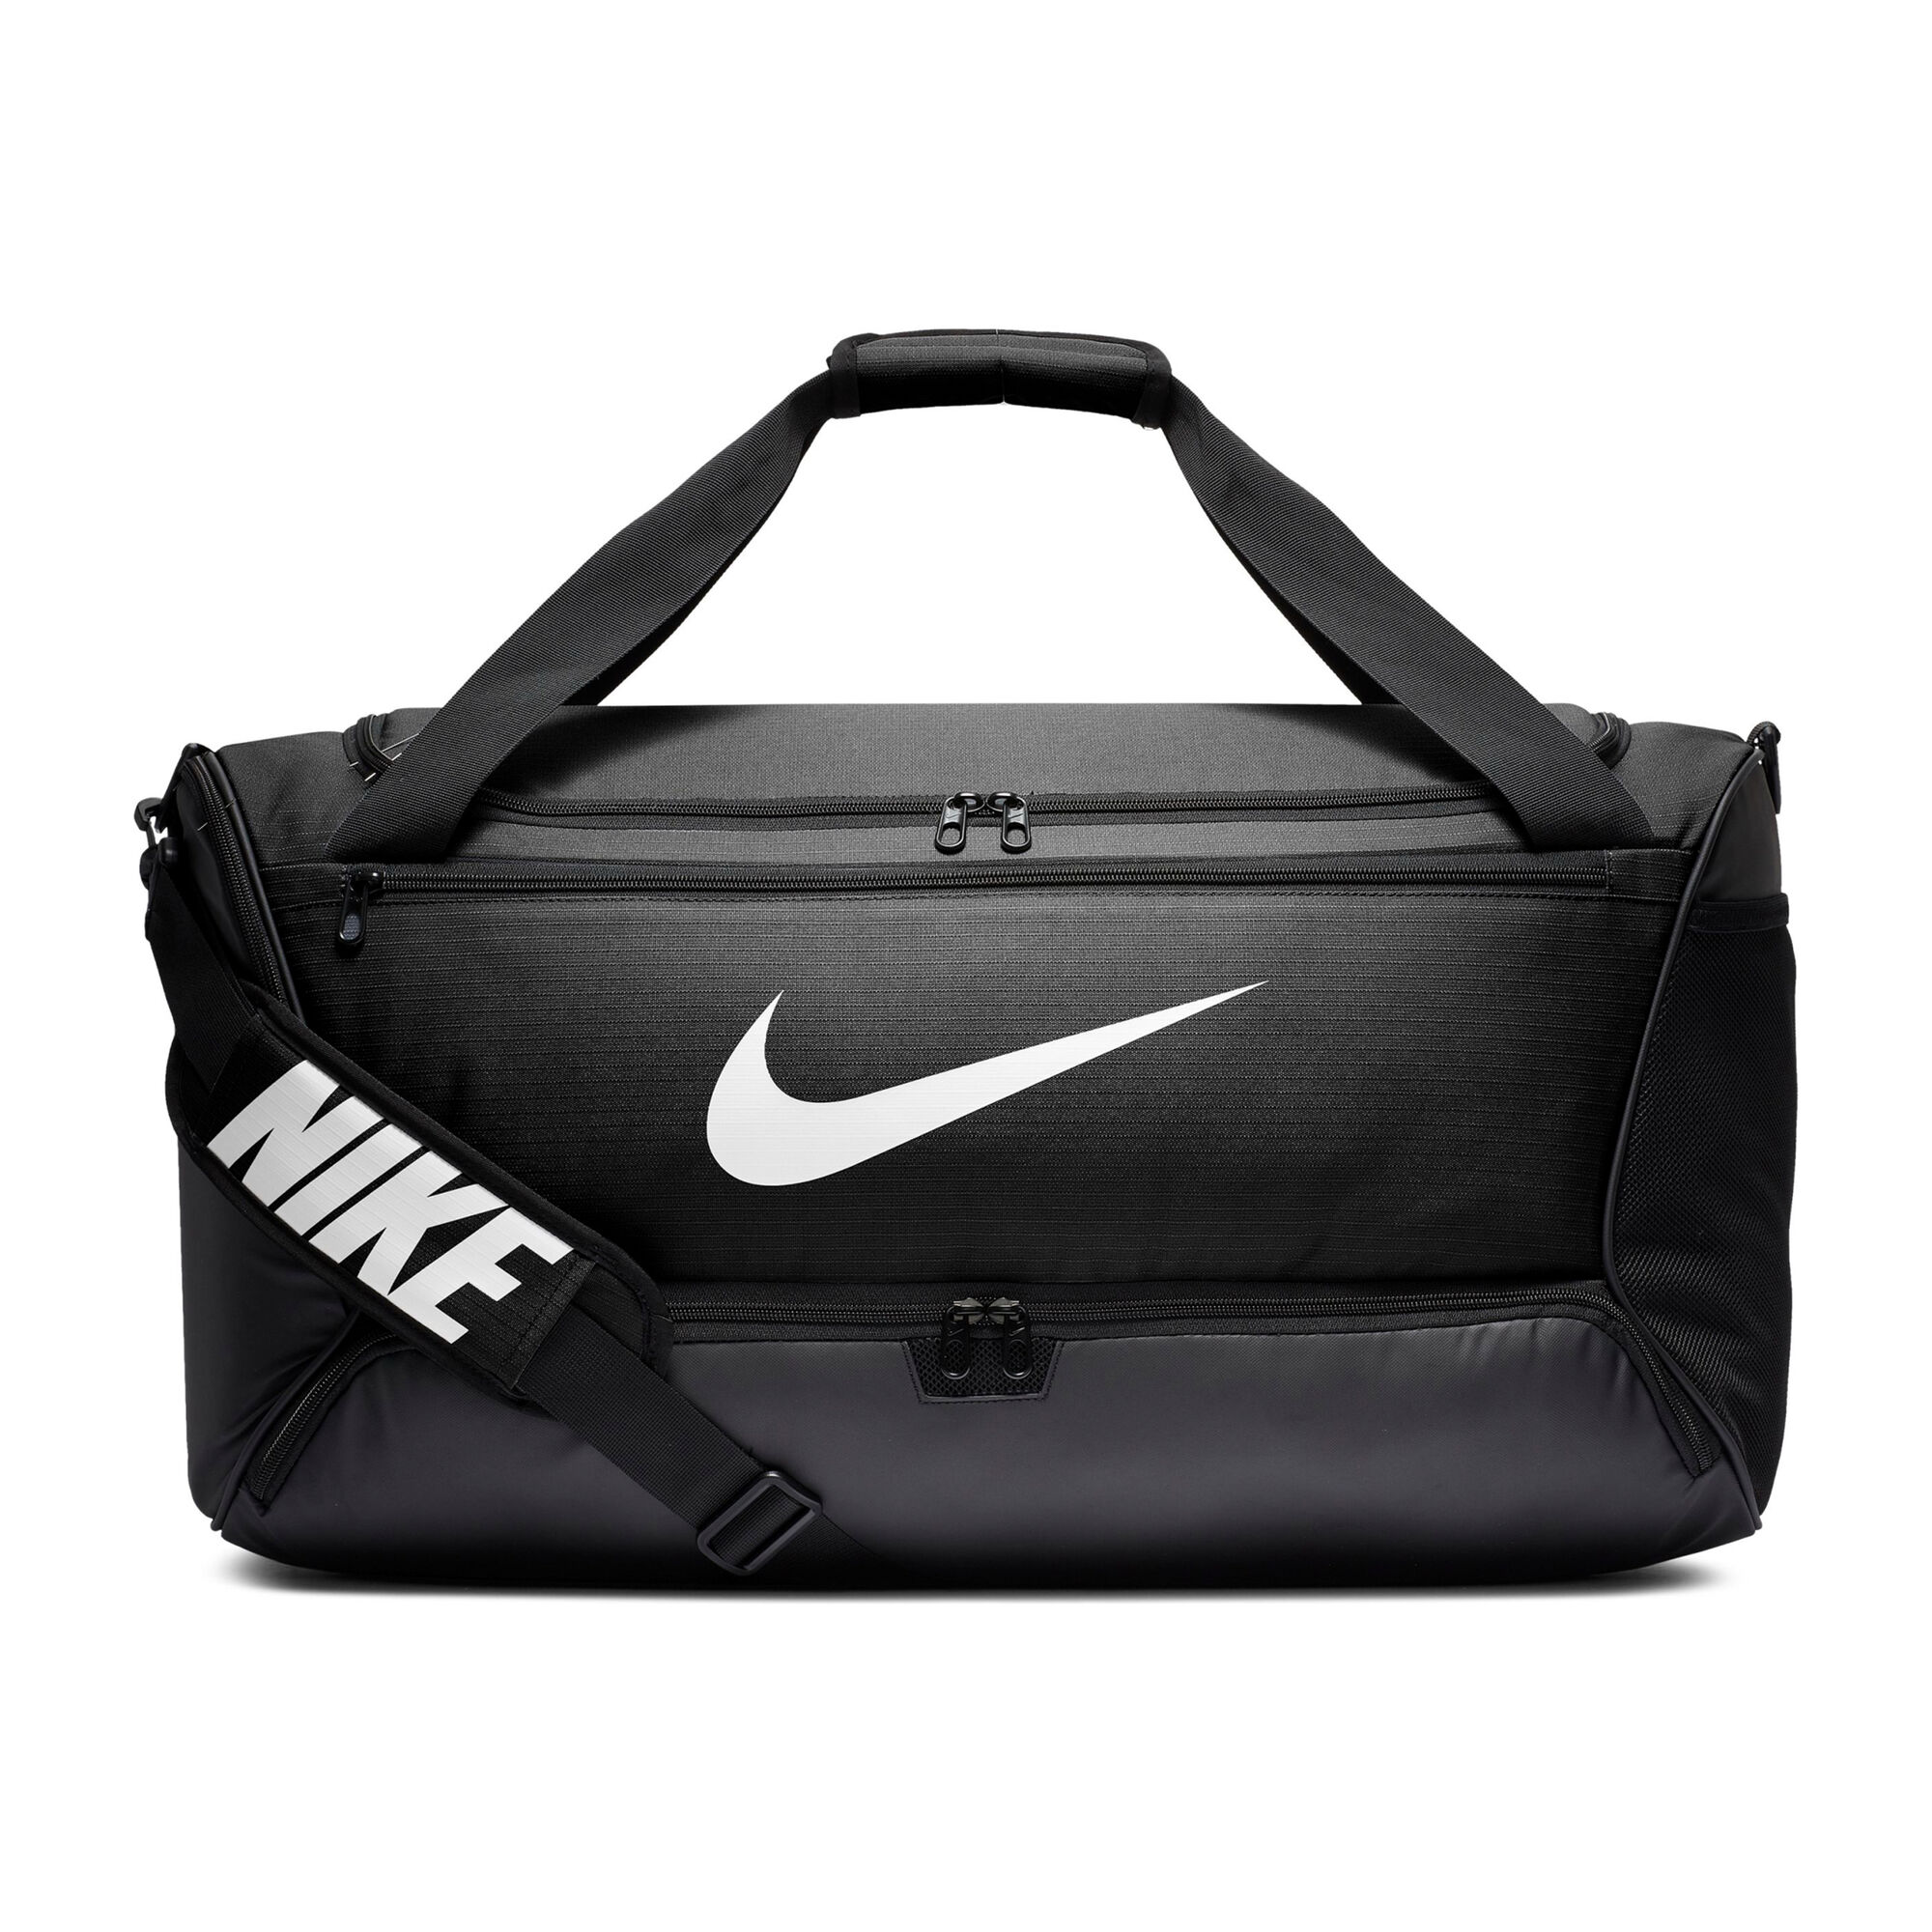 toma una foto difícil Mansedumbre Nike Brasilia Duffel Medium Bolsa Deporte - Negro, Blanco compra online |  Tennis-Point